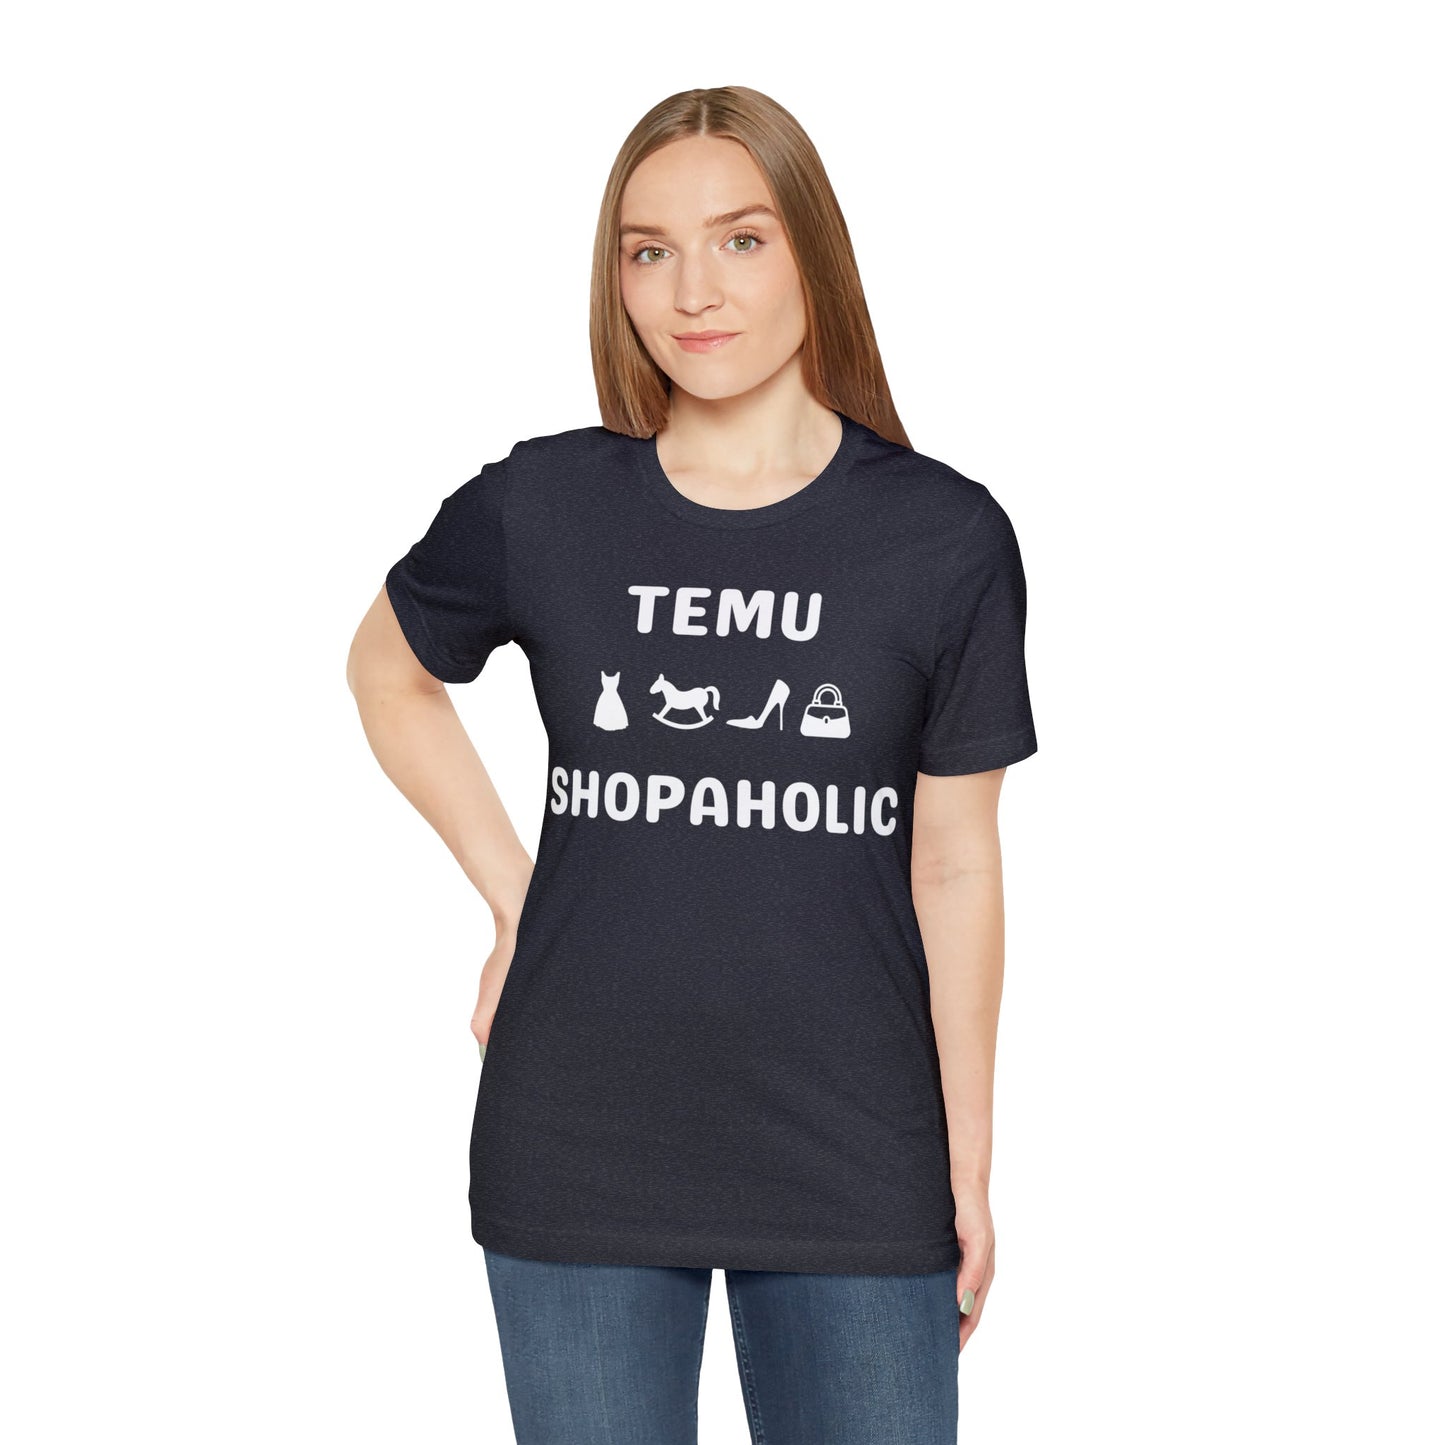 TEMU Shopaholic - Unisex Jersey Short Sleeve Tee